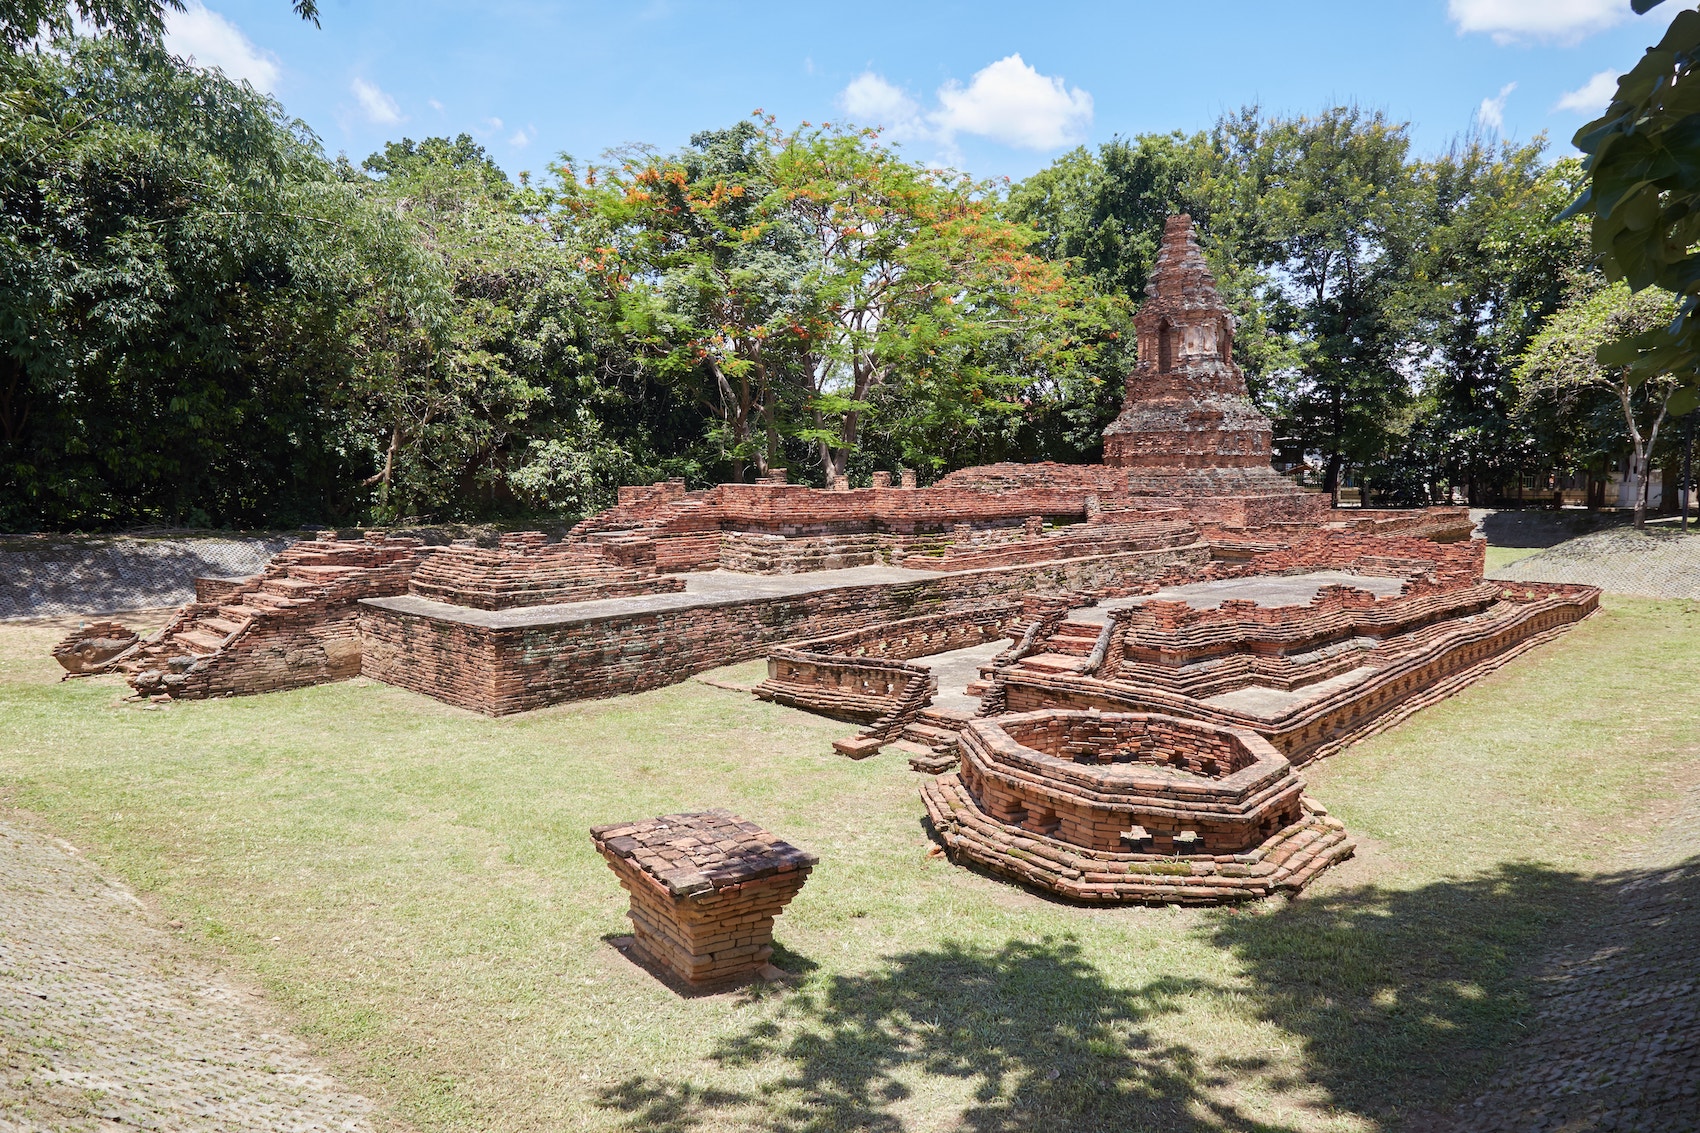 Wat Pupia Wiang Kum Kam